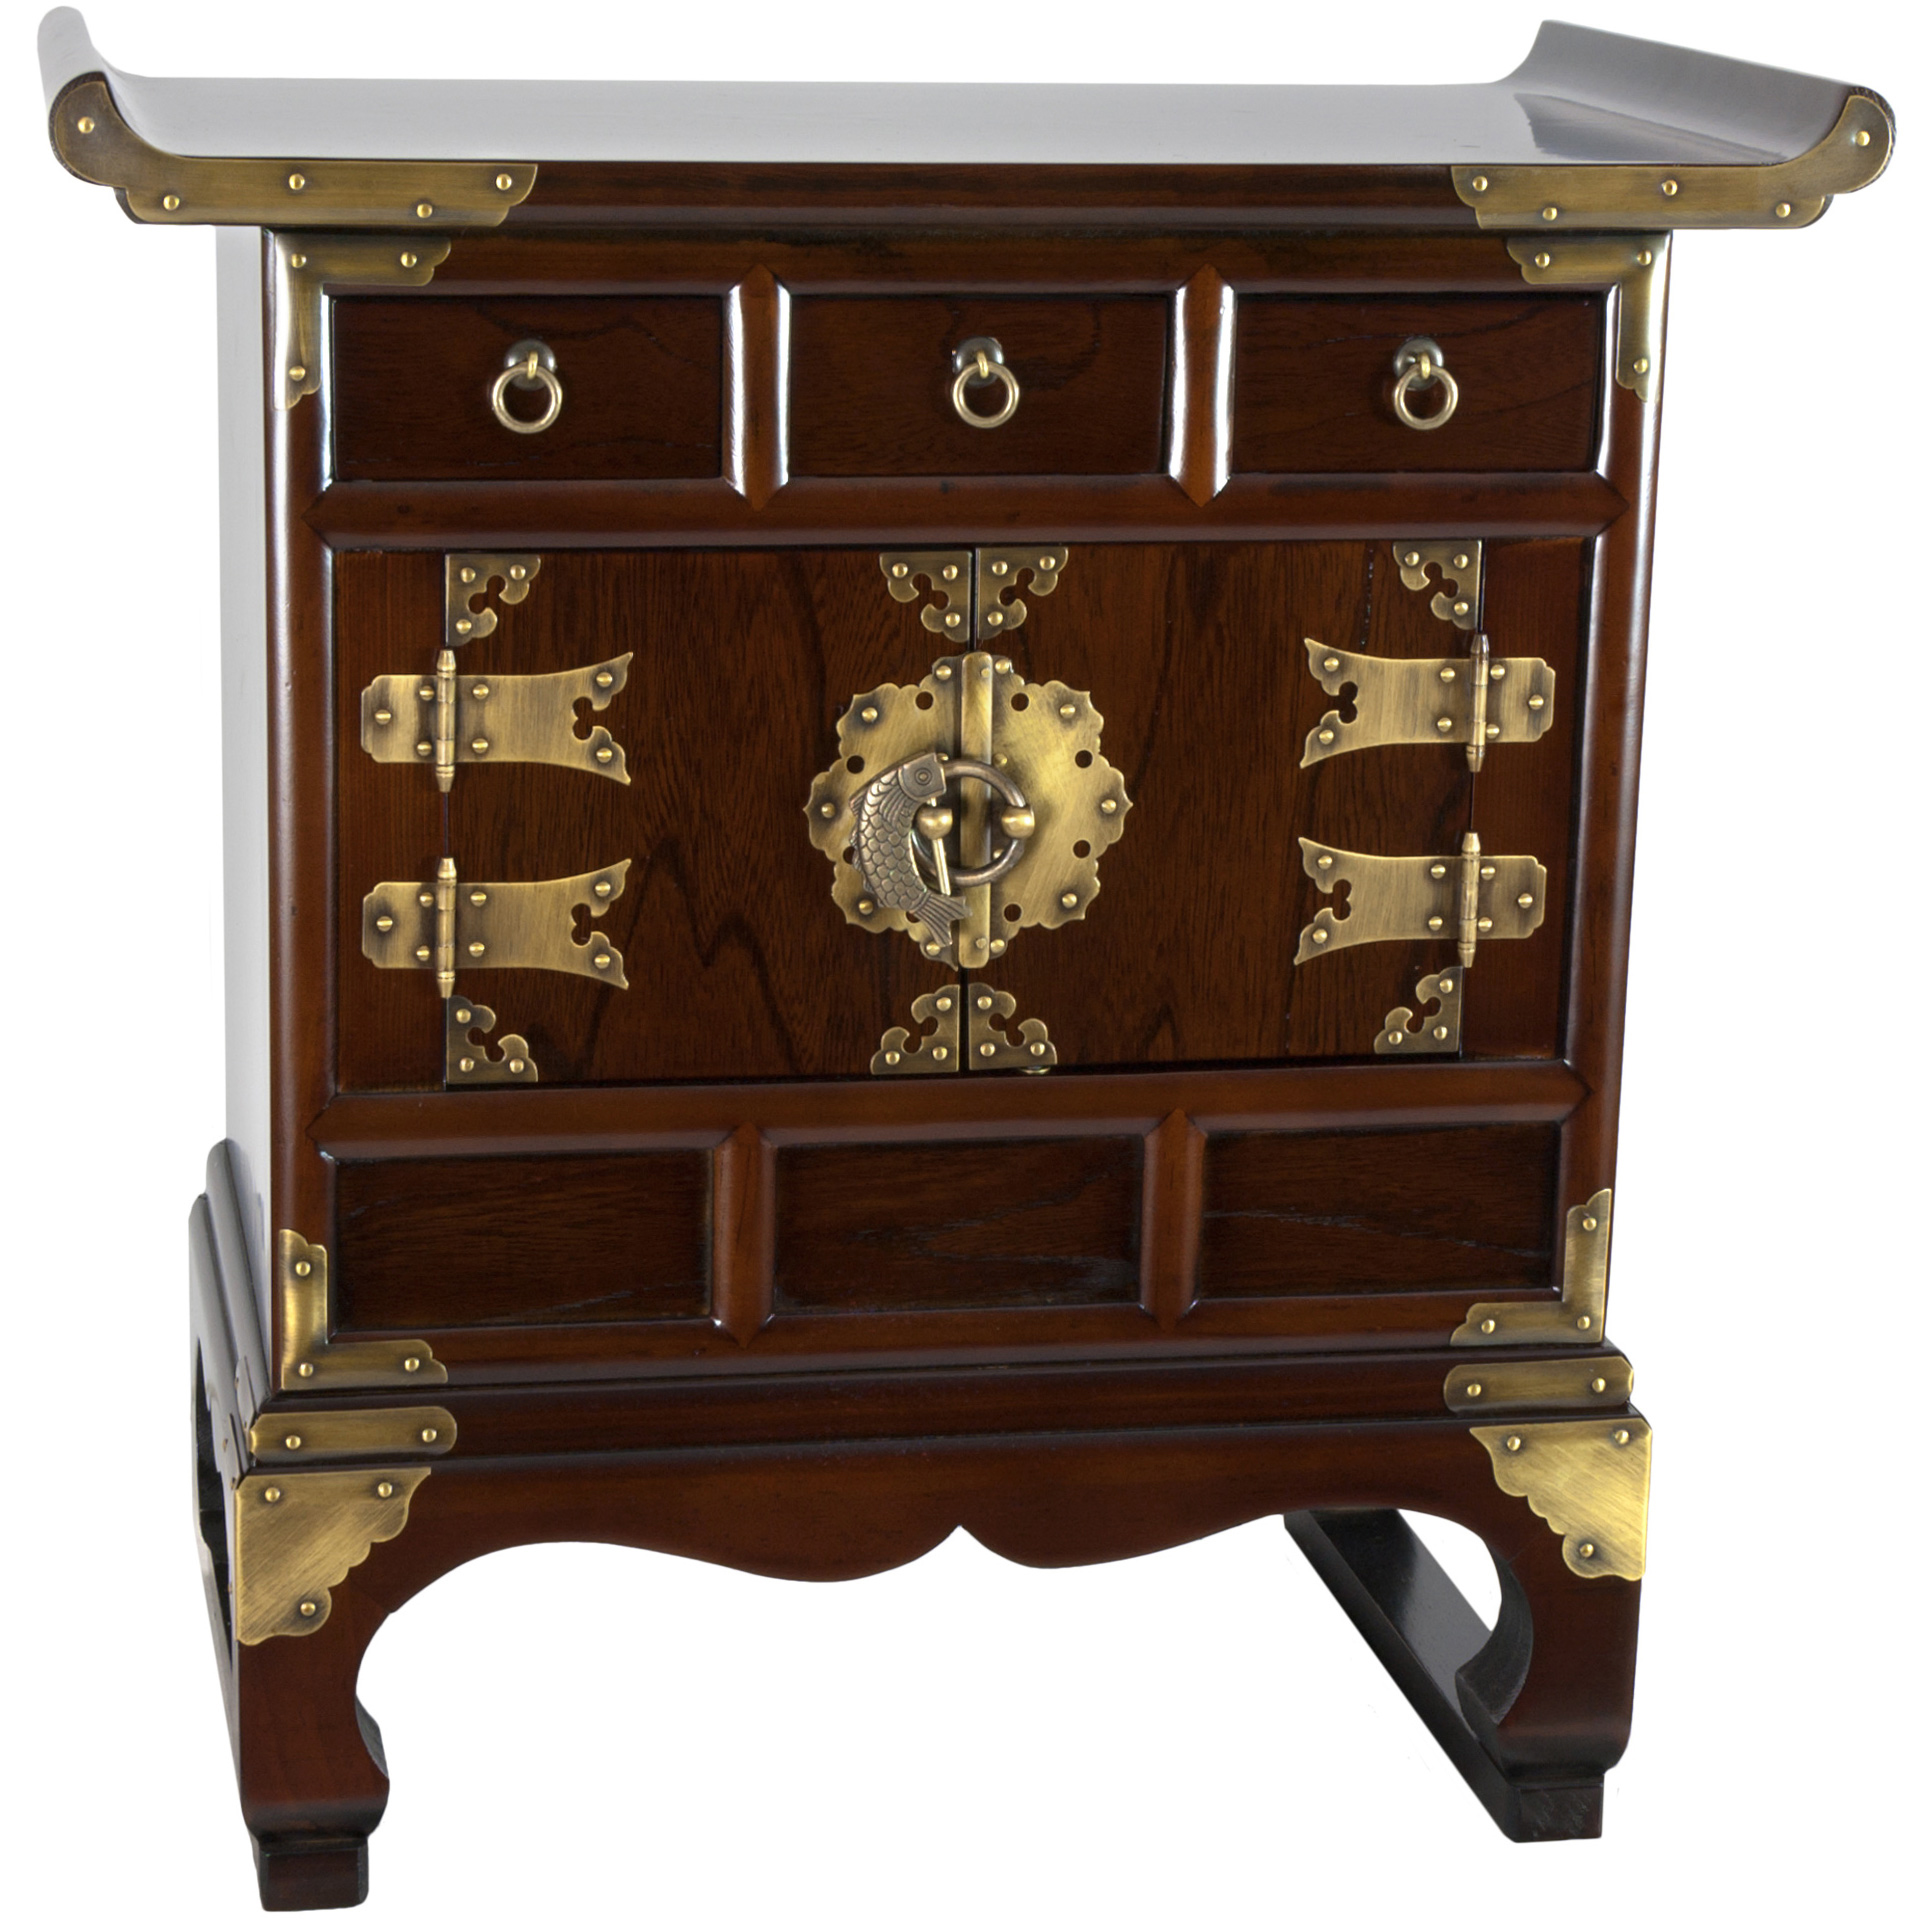 Buy Korean  Antique Style 3 Drawer End Table Cabinet Online KRN B 1 Satisfaction Guaranteed